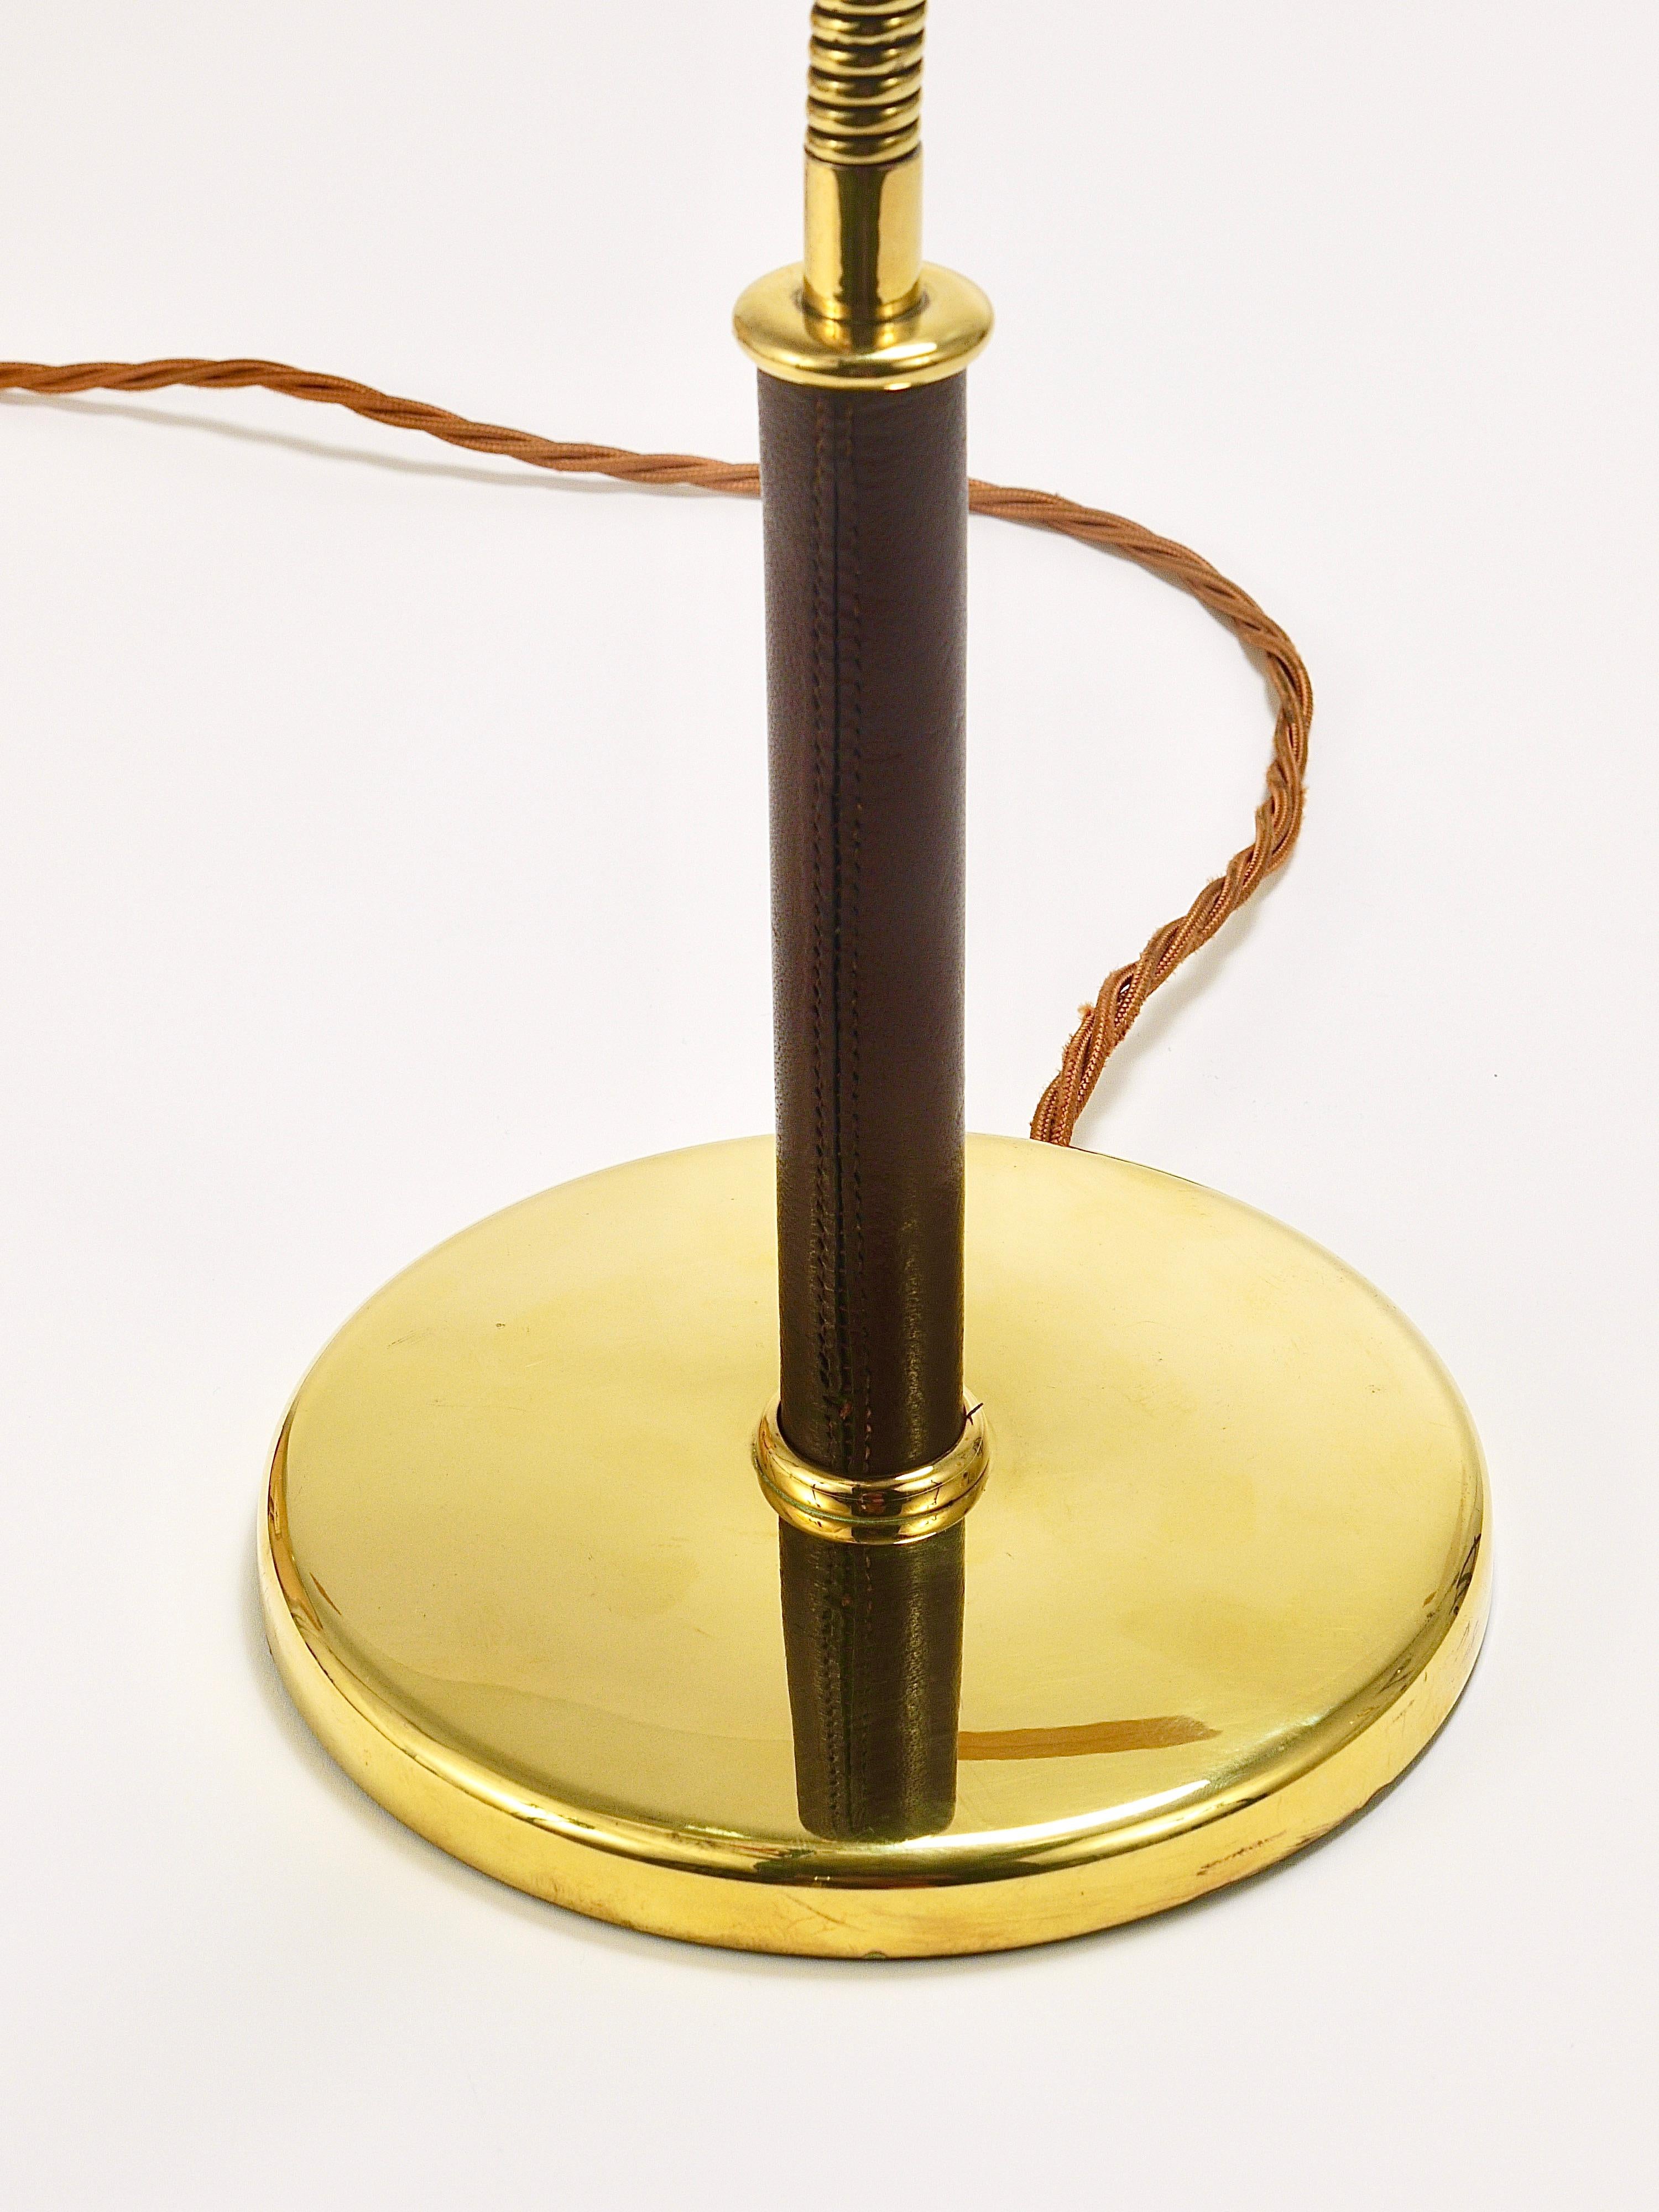 Josef Frank J.T. Kalmar Table Lamp Tisch-Überall, Brass & Leather, Austria, 1930 For Sale 1